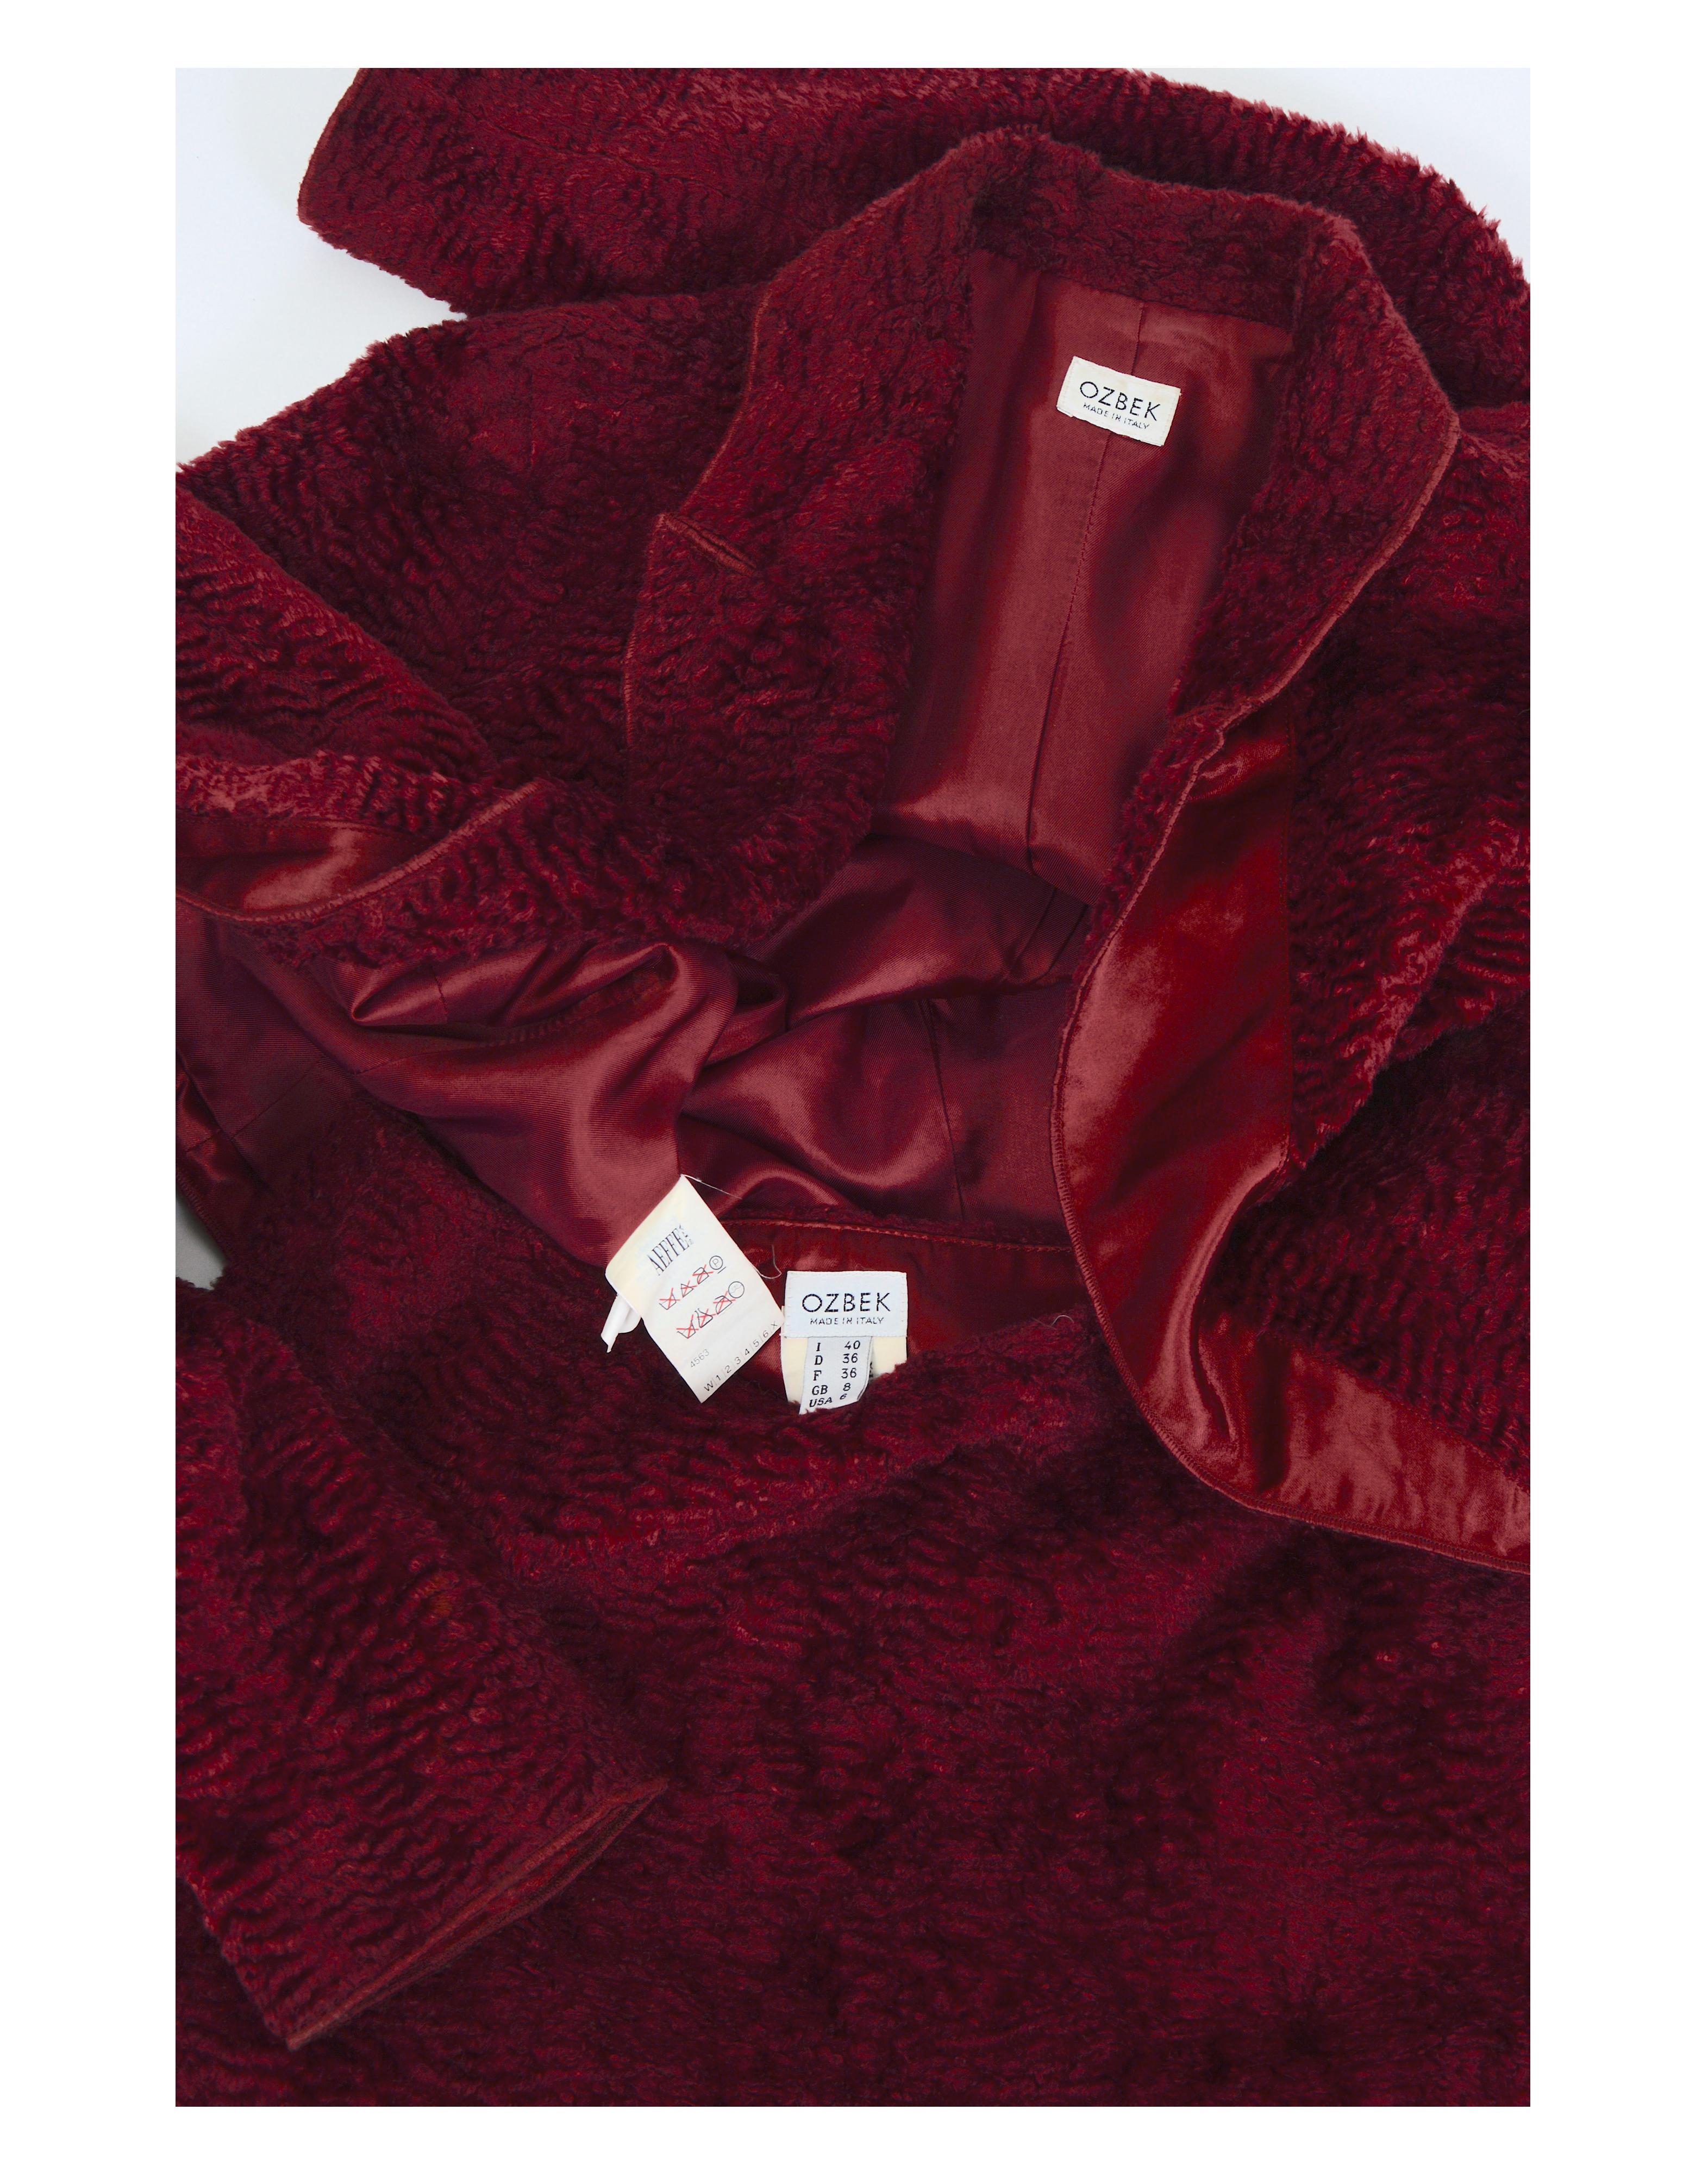 Ozbek by Rifat Ozbek vintage 90s burgundy cotton faux fur astrakhan suit For Sale 4